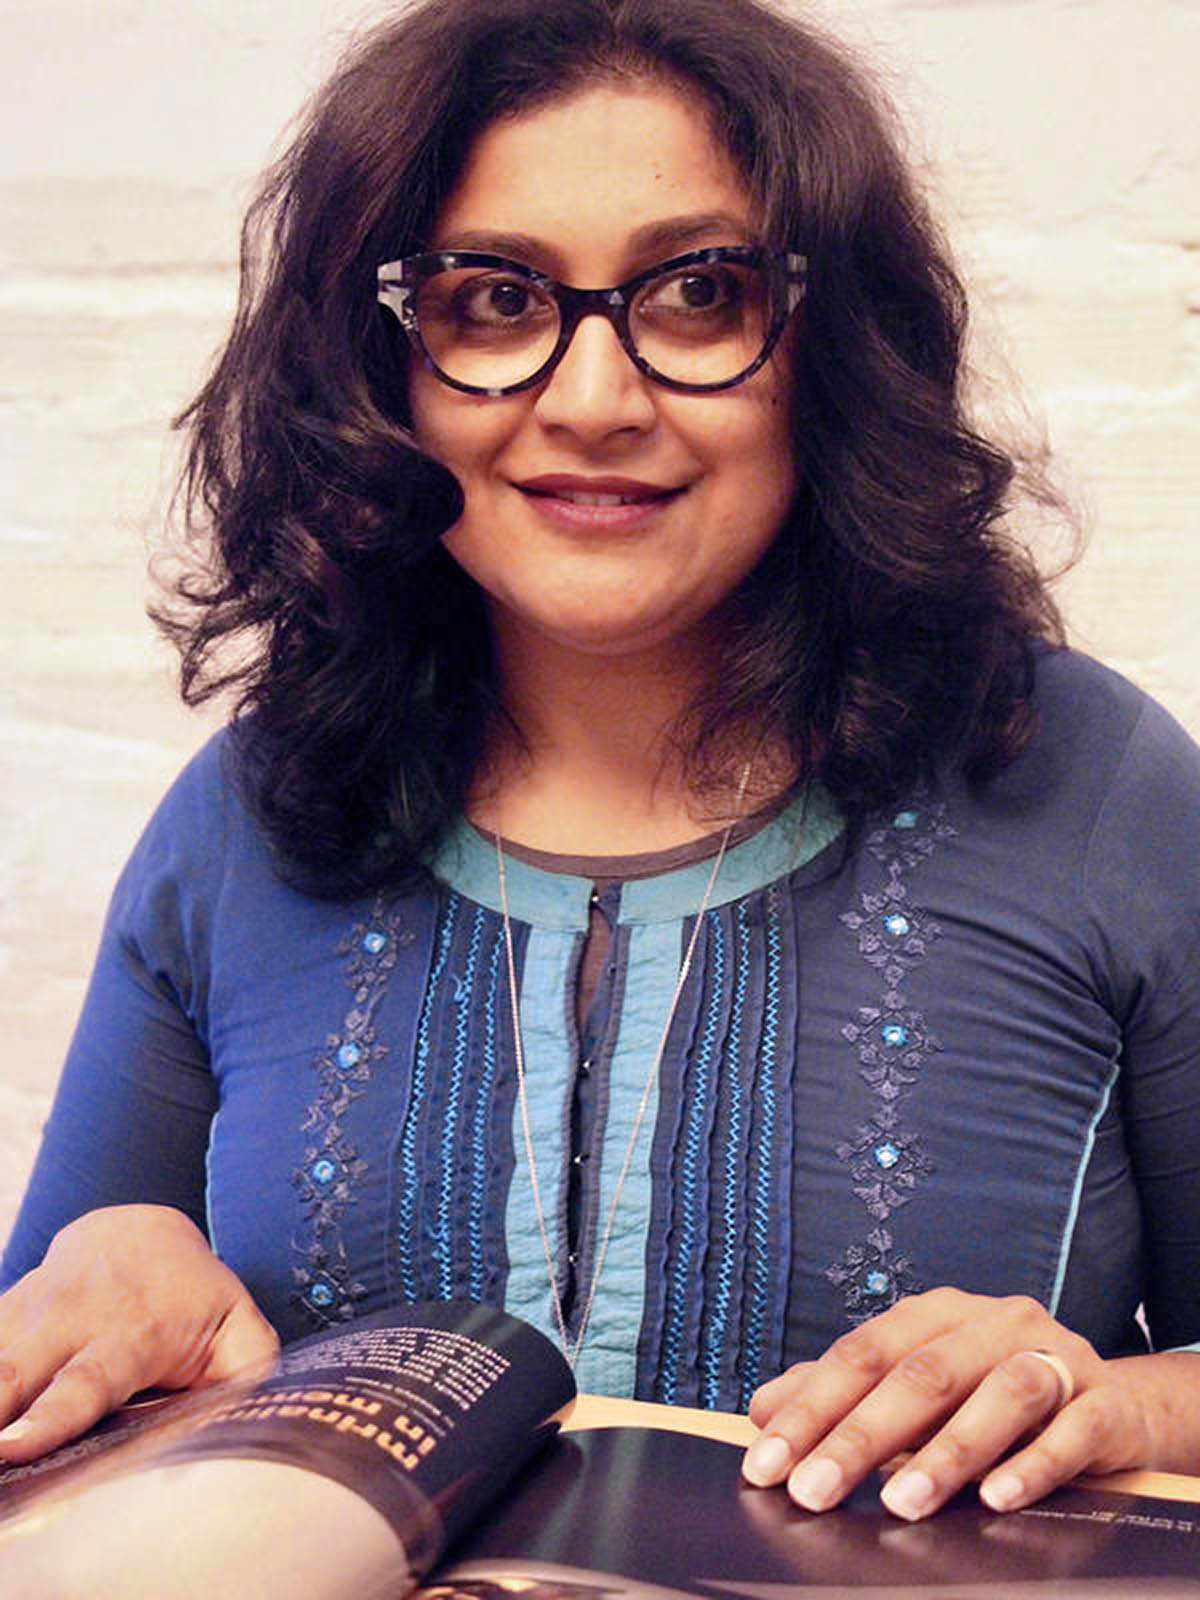 Headshot of Anooradha Iyer Siddiqi, who wears glasses and a blue shirt.